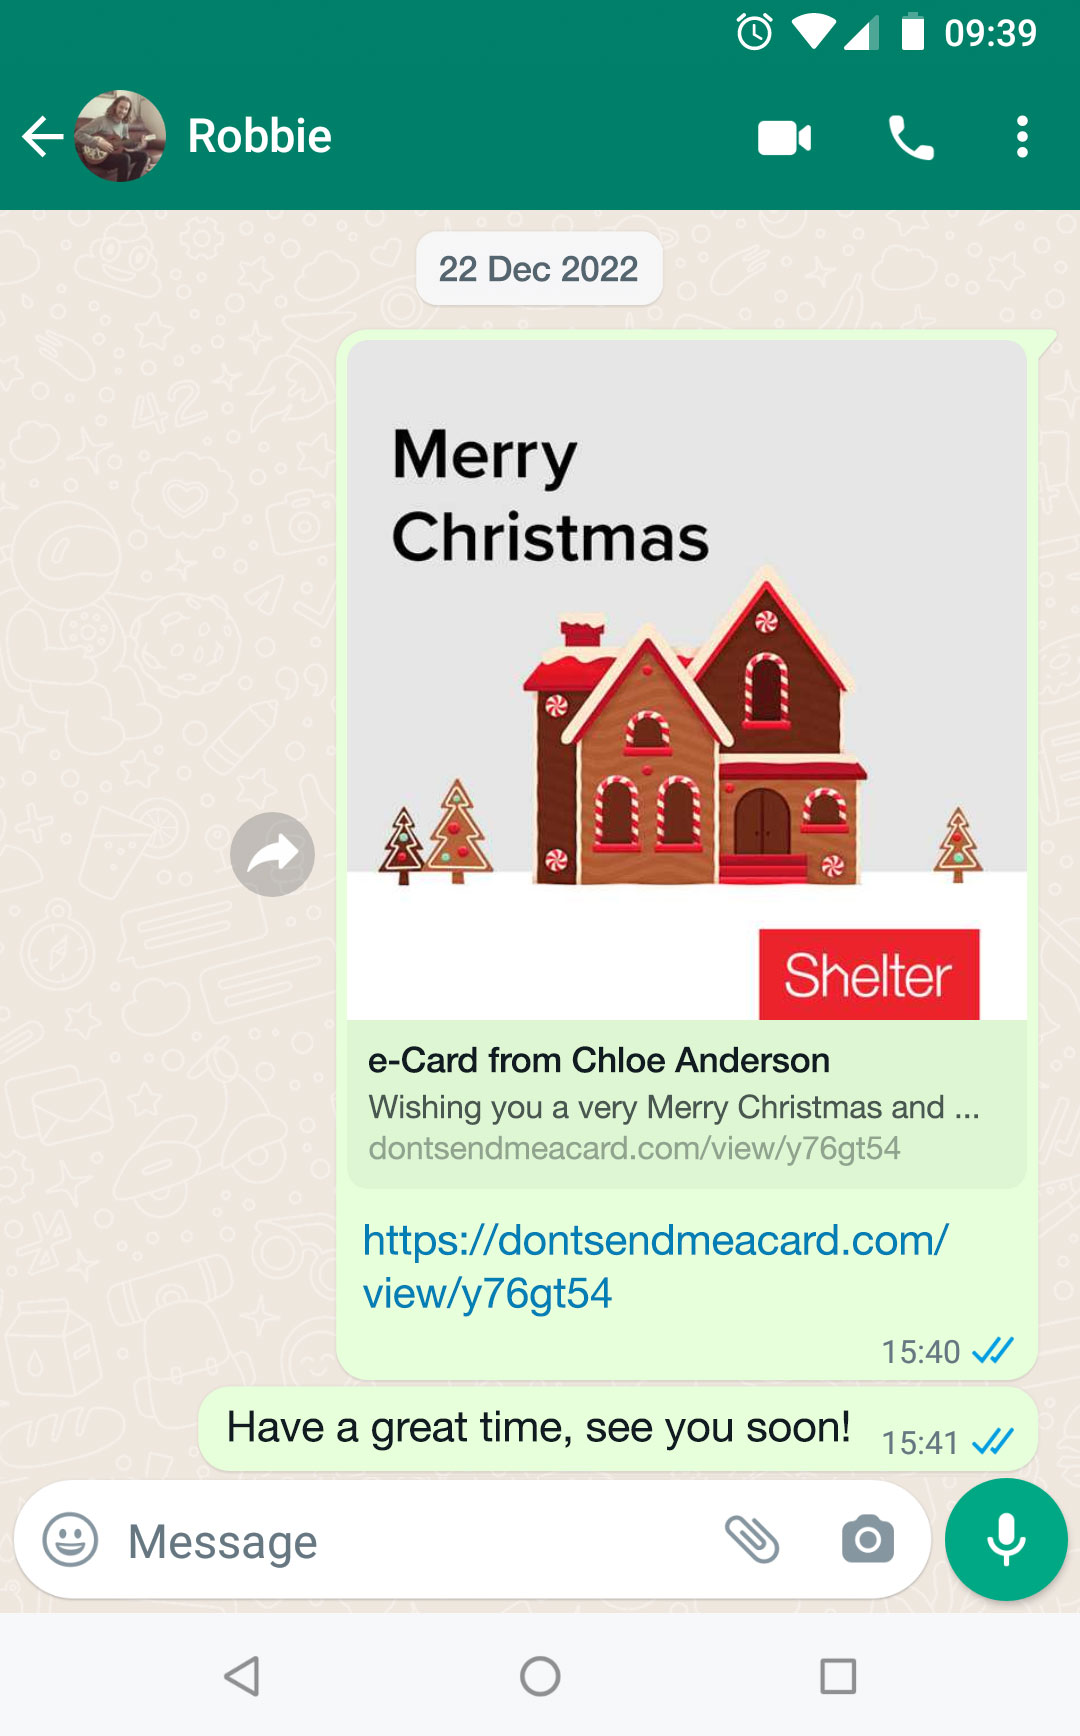 whatsapp-ecards-share-to-whatsapp-send-online-for-charity-dontsendmeacard